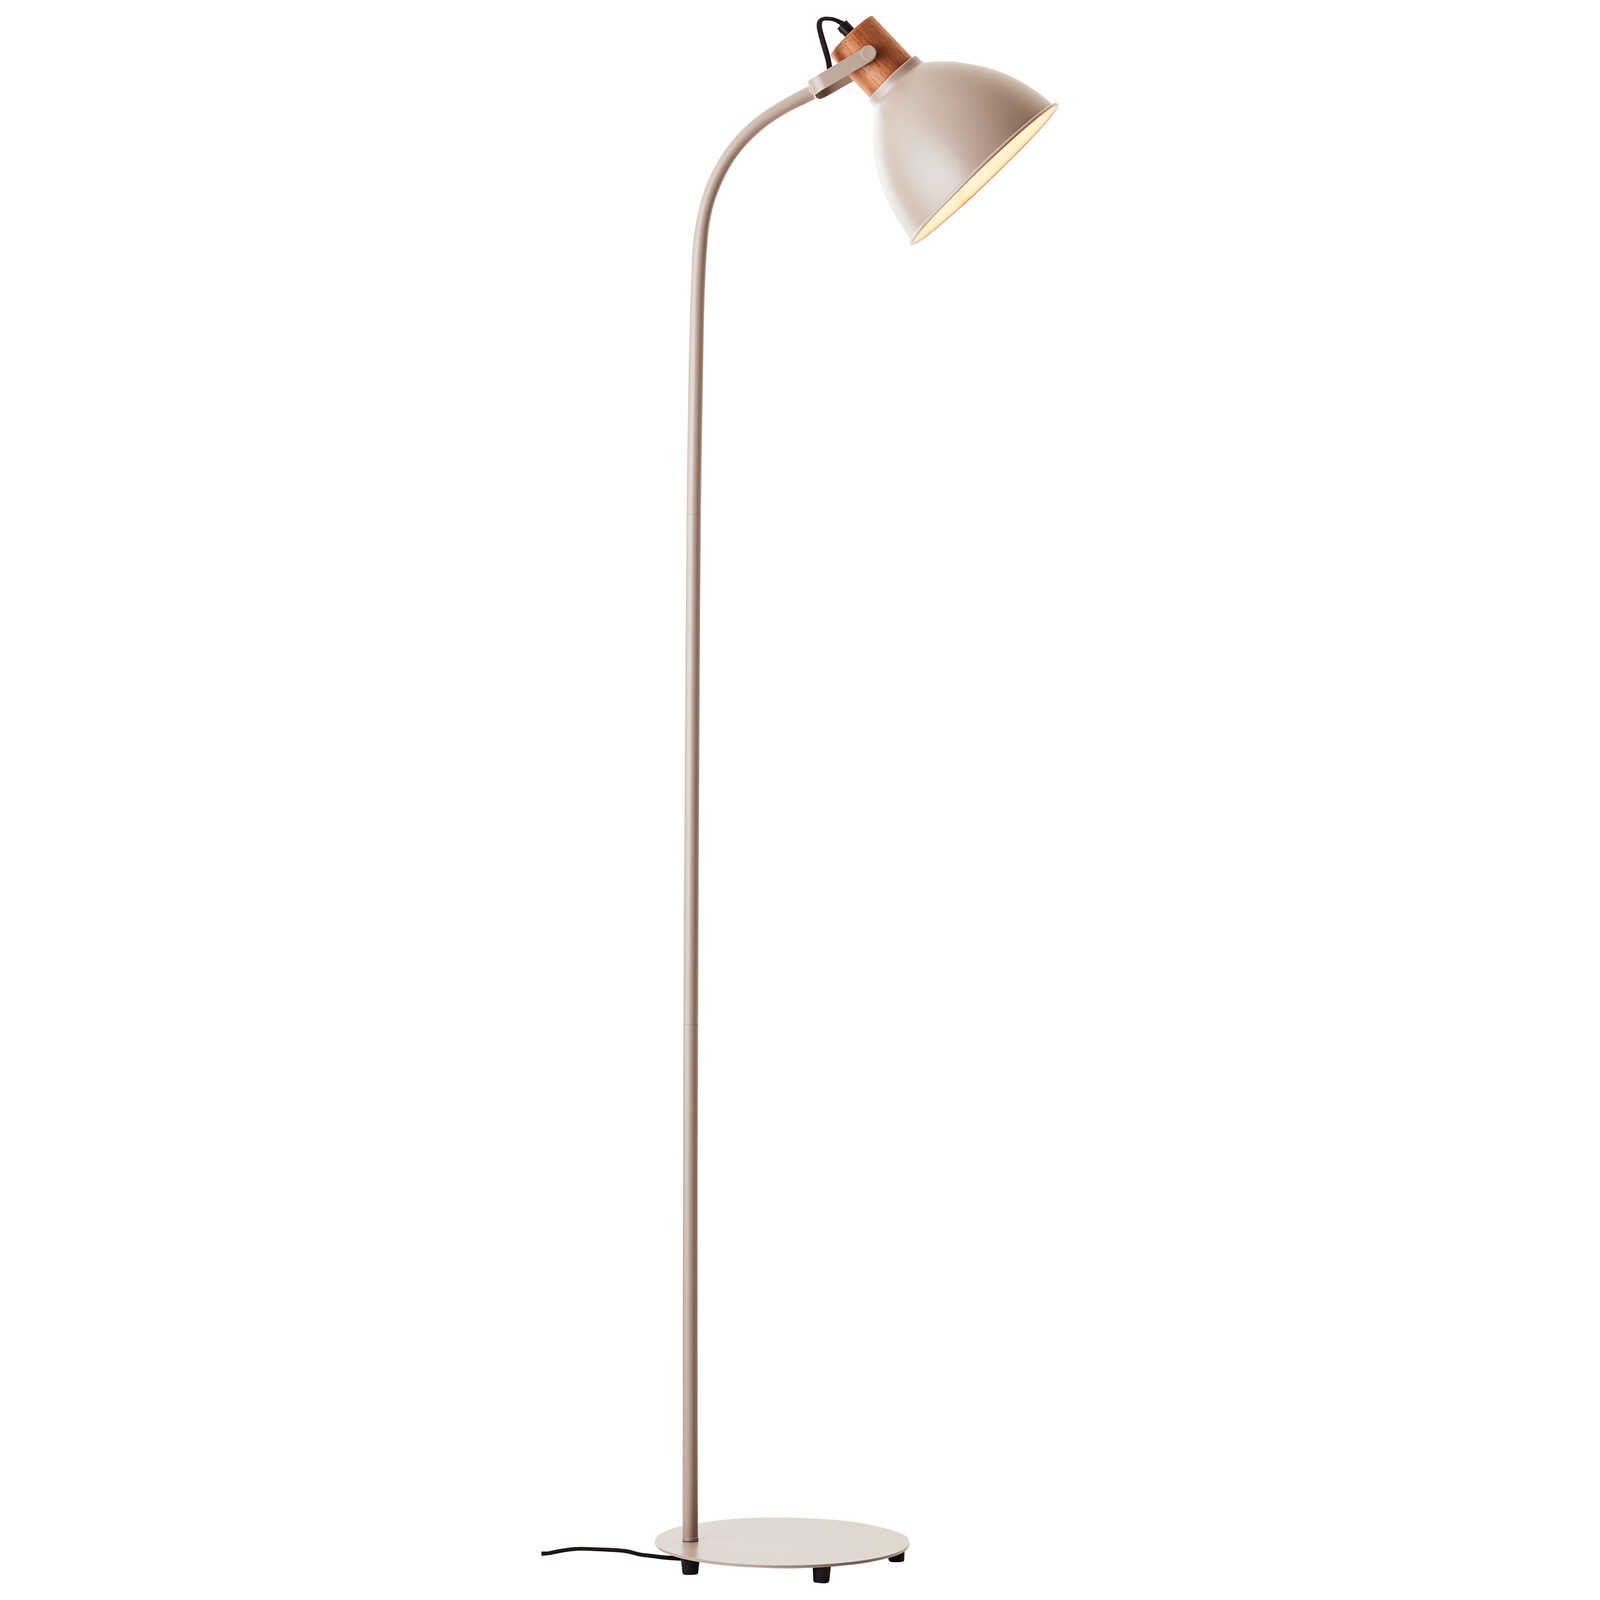             Wooden floor lamp - Franziska 8 - Grey
        